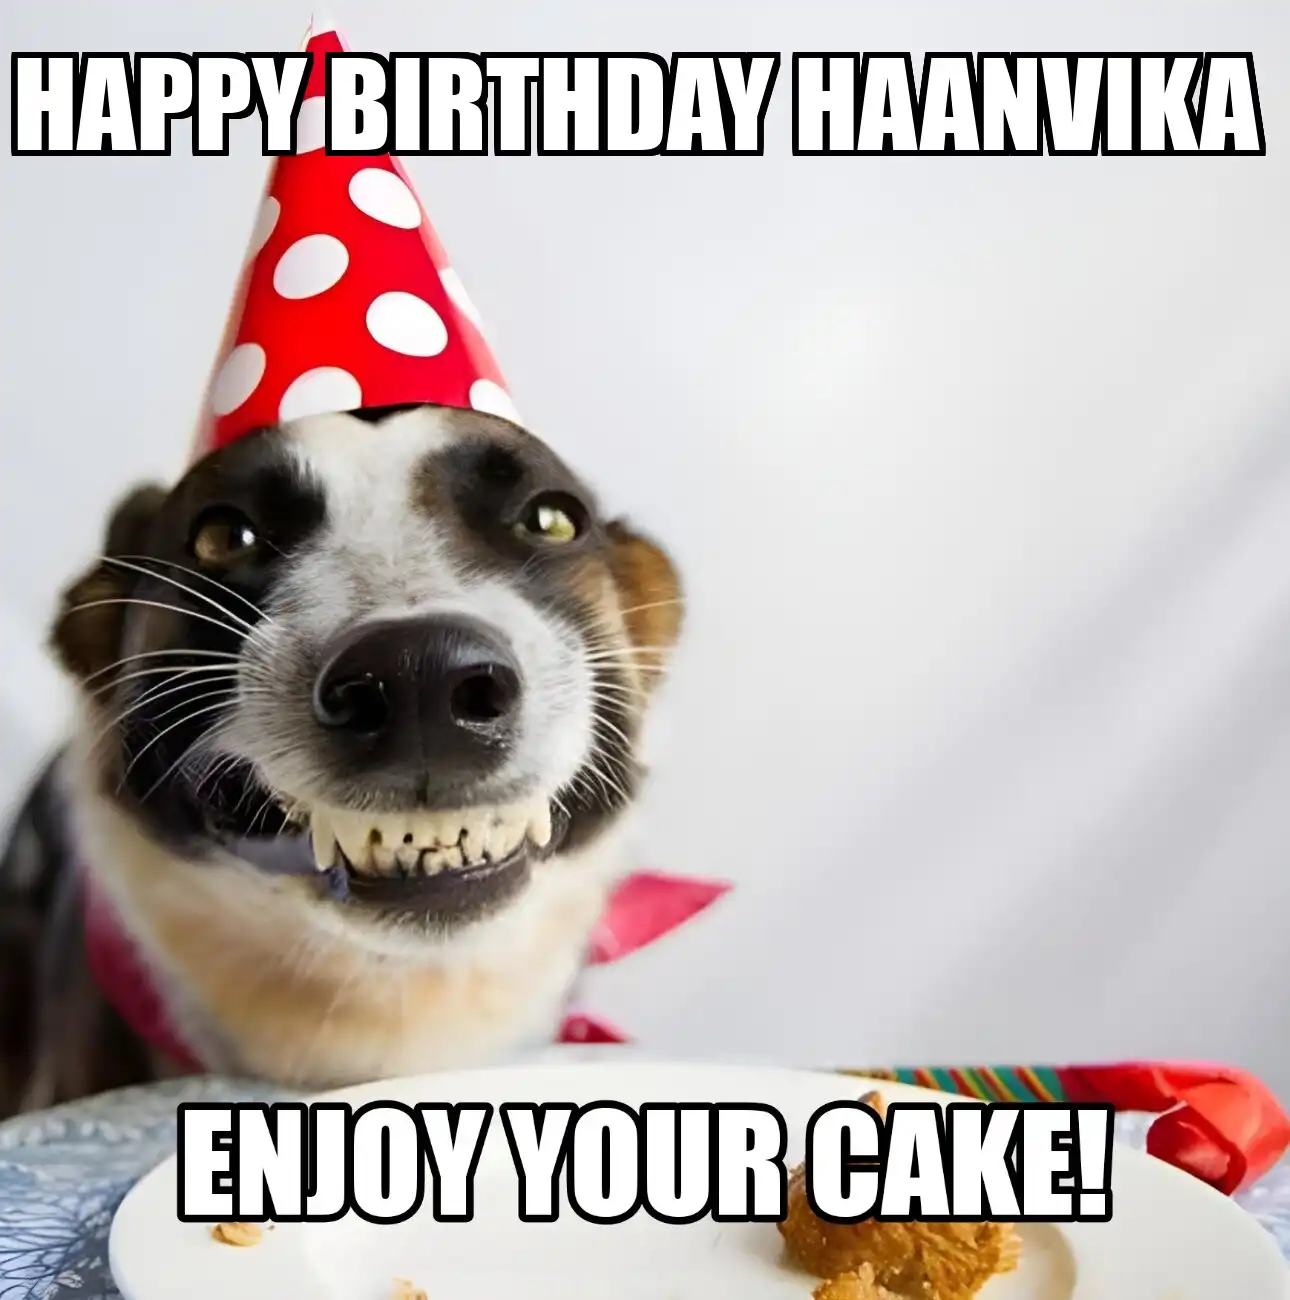 Happy Birthday Haanvika Enjoy Your Cake Dog Meme